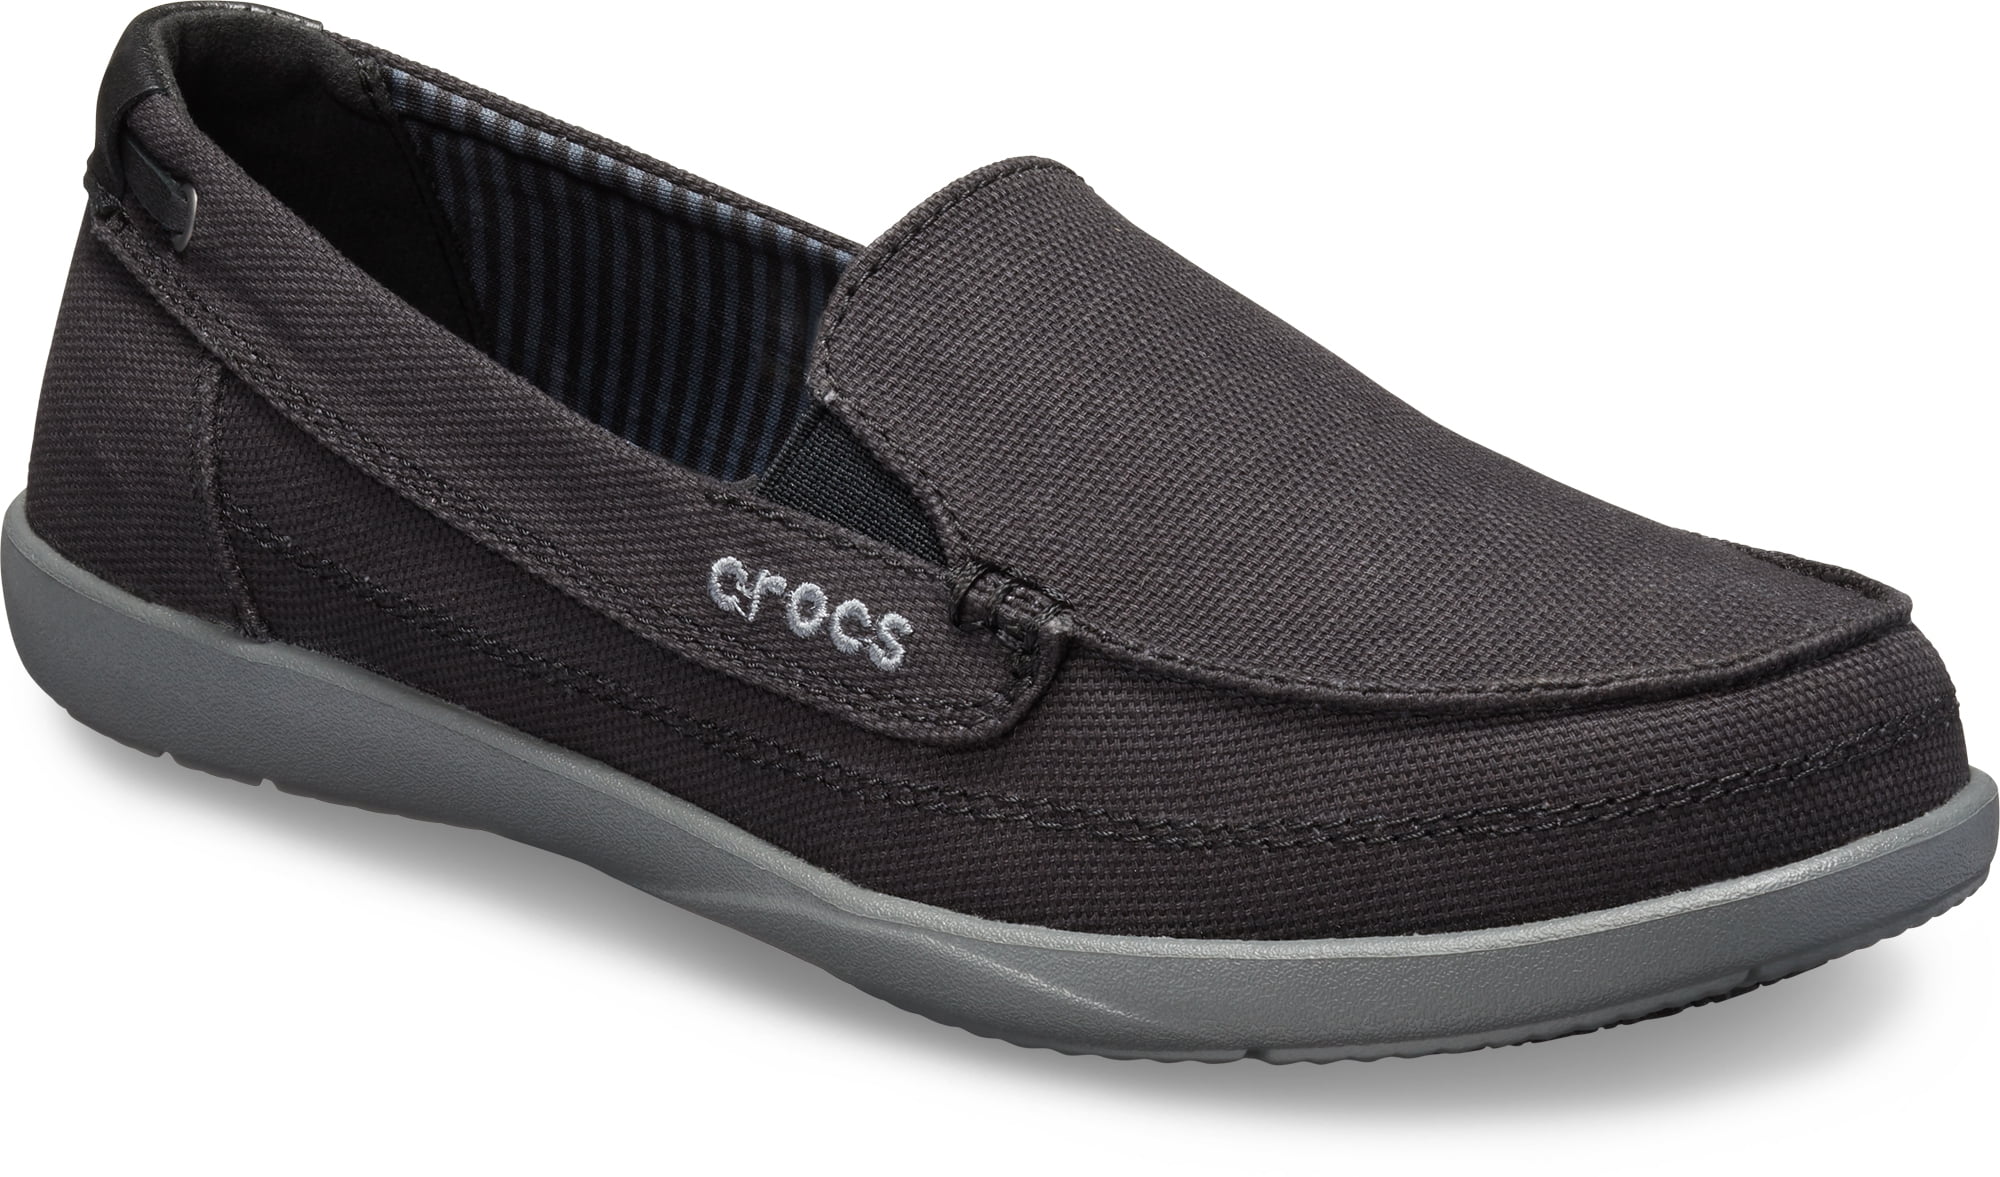  Crocs  Crocs  Women s  Walu Canvas Loafers Walmart com 